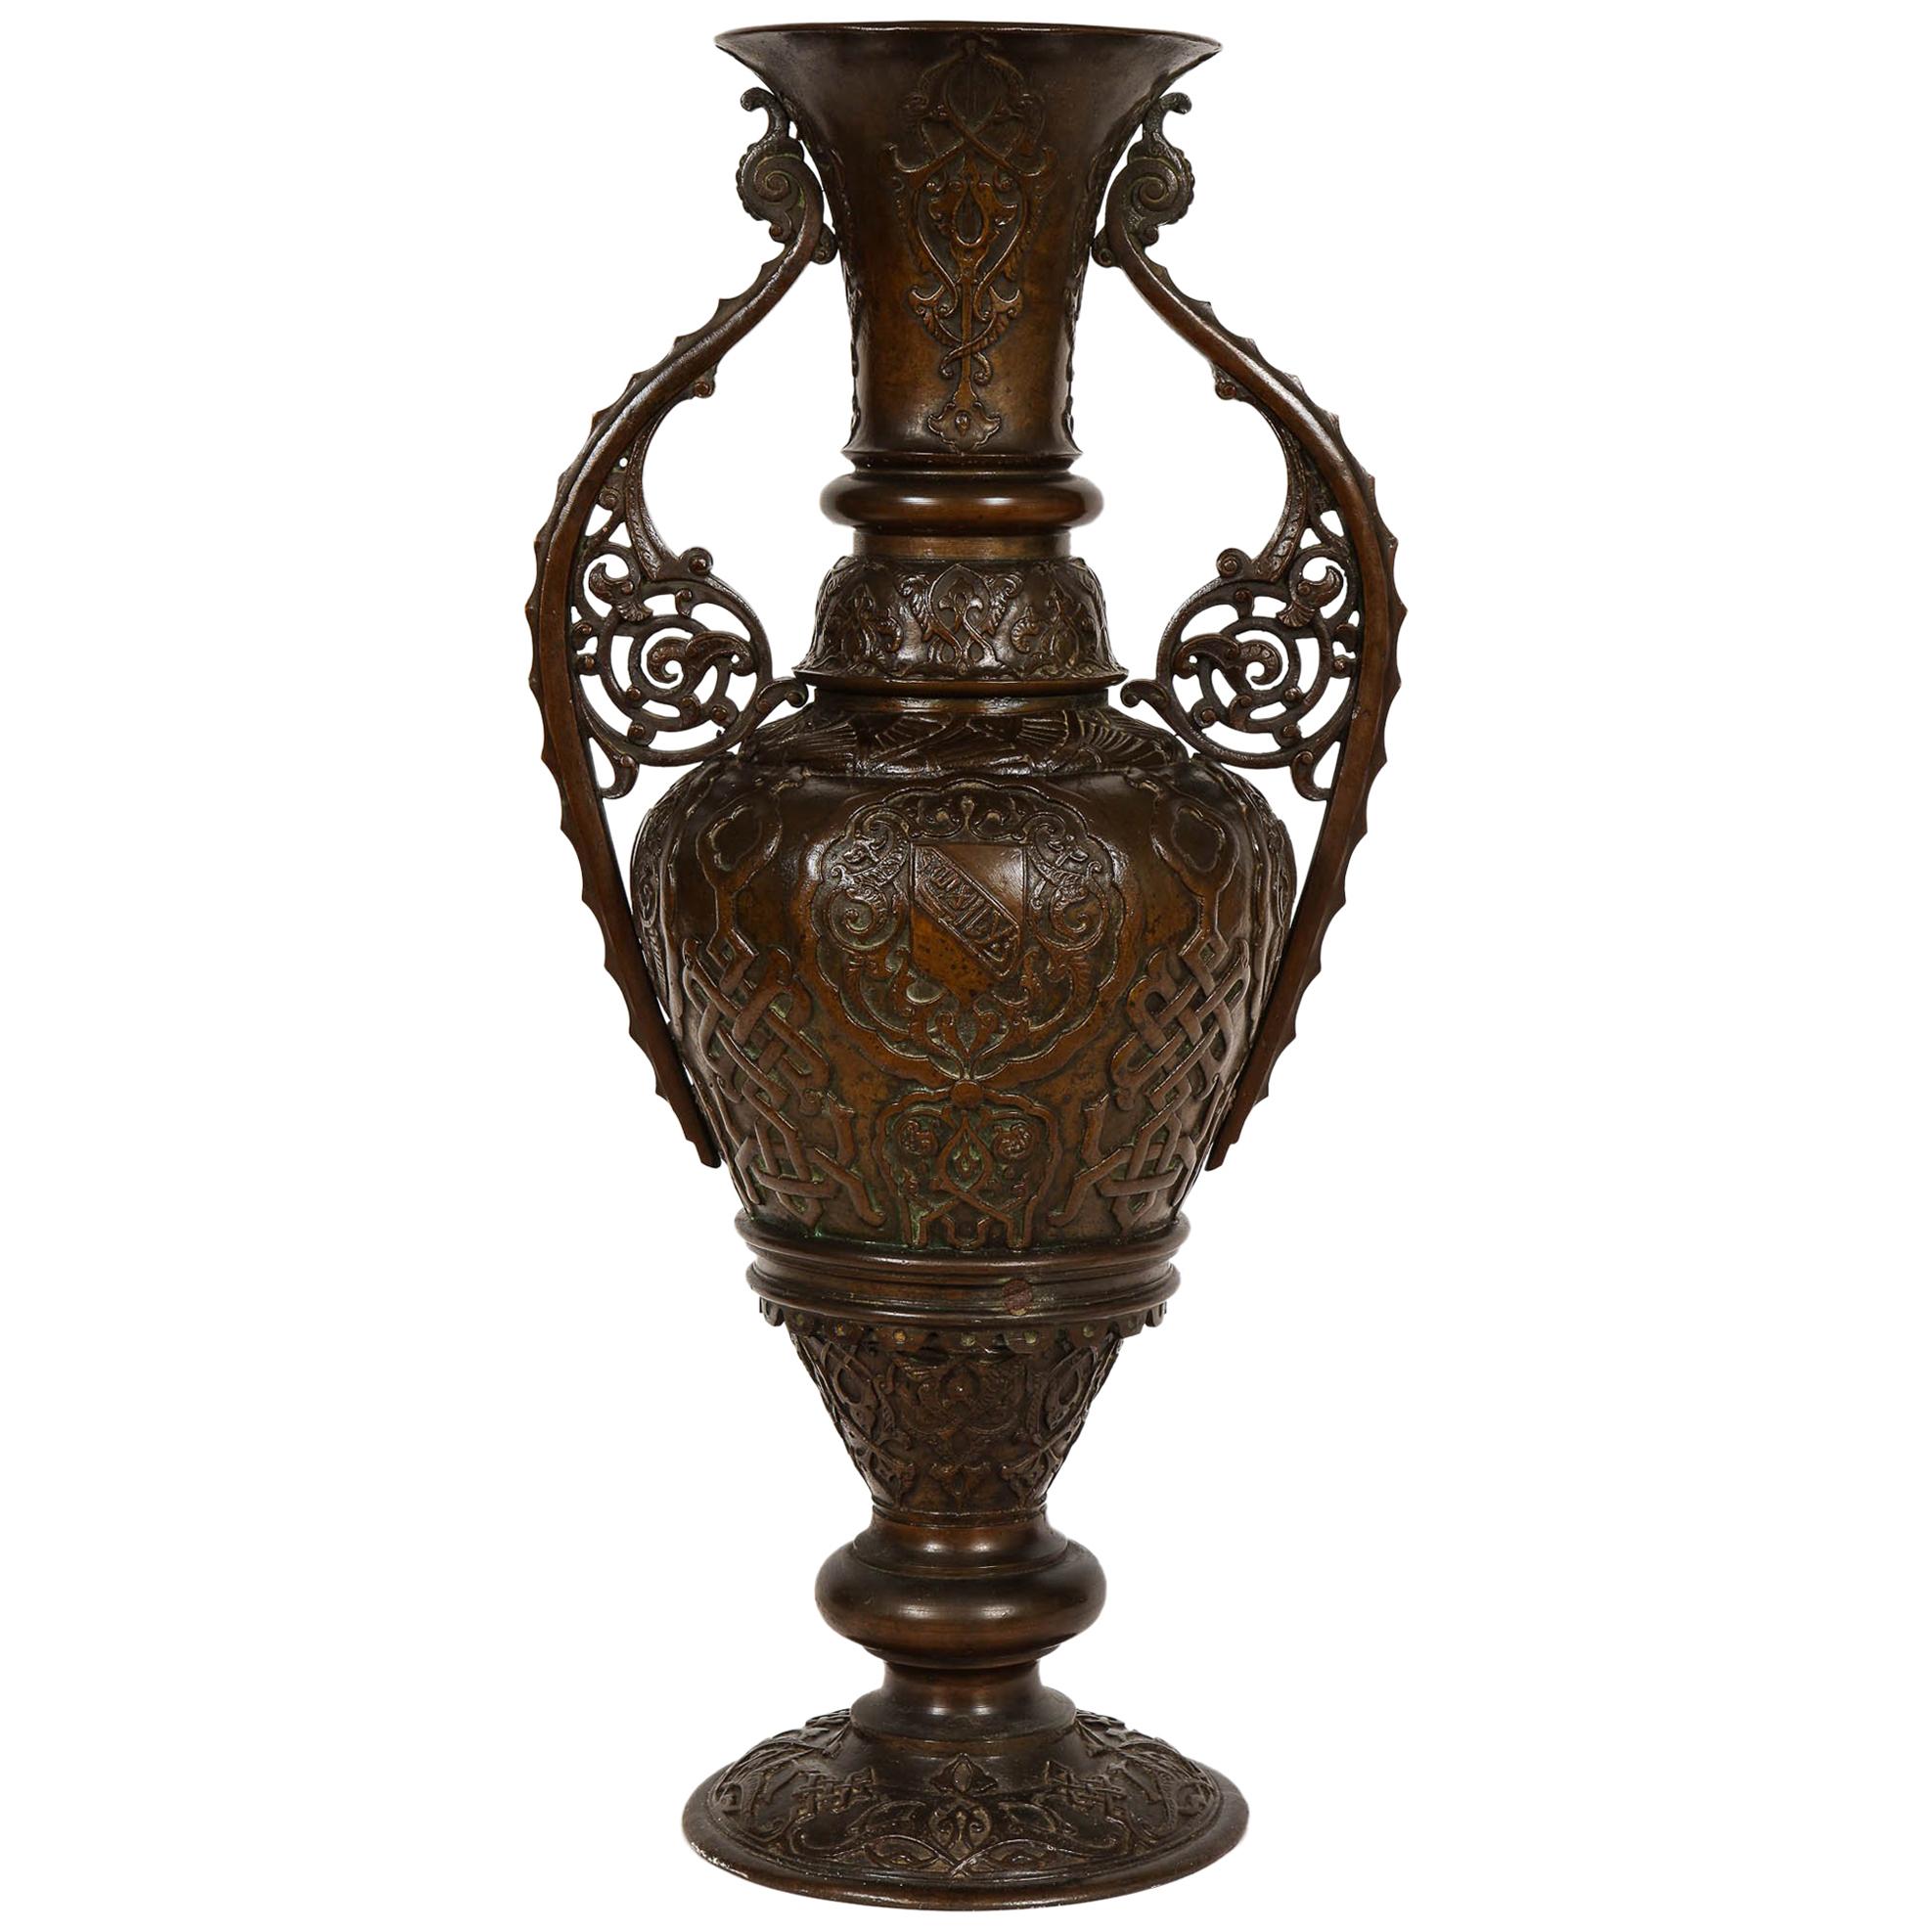 Large Patinated Bronze Alhambra Islamic Vase Made for the Islamic Market